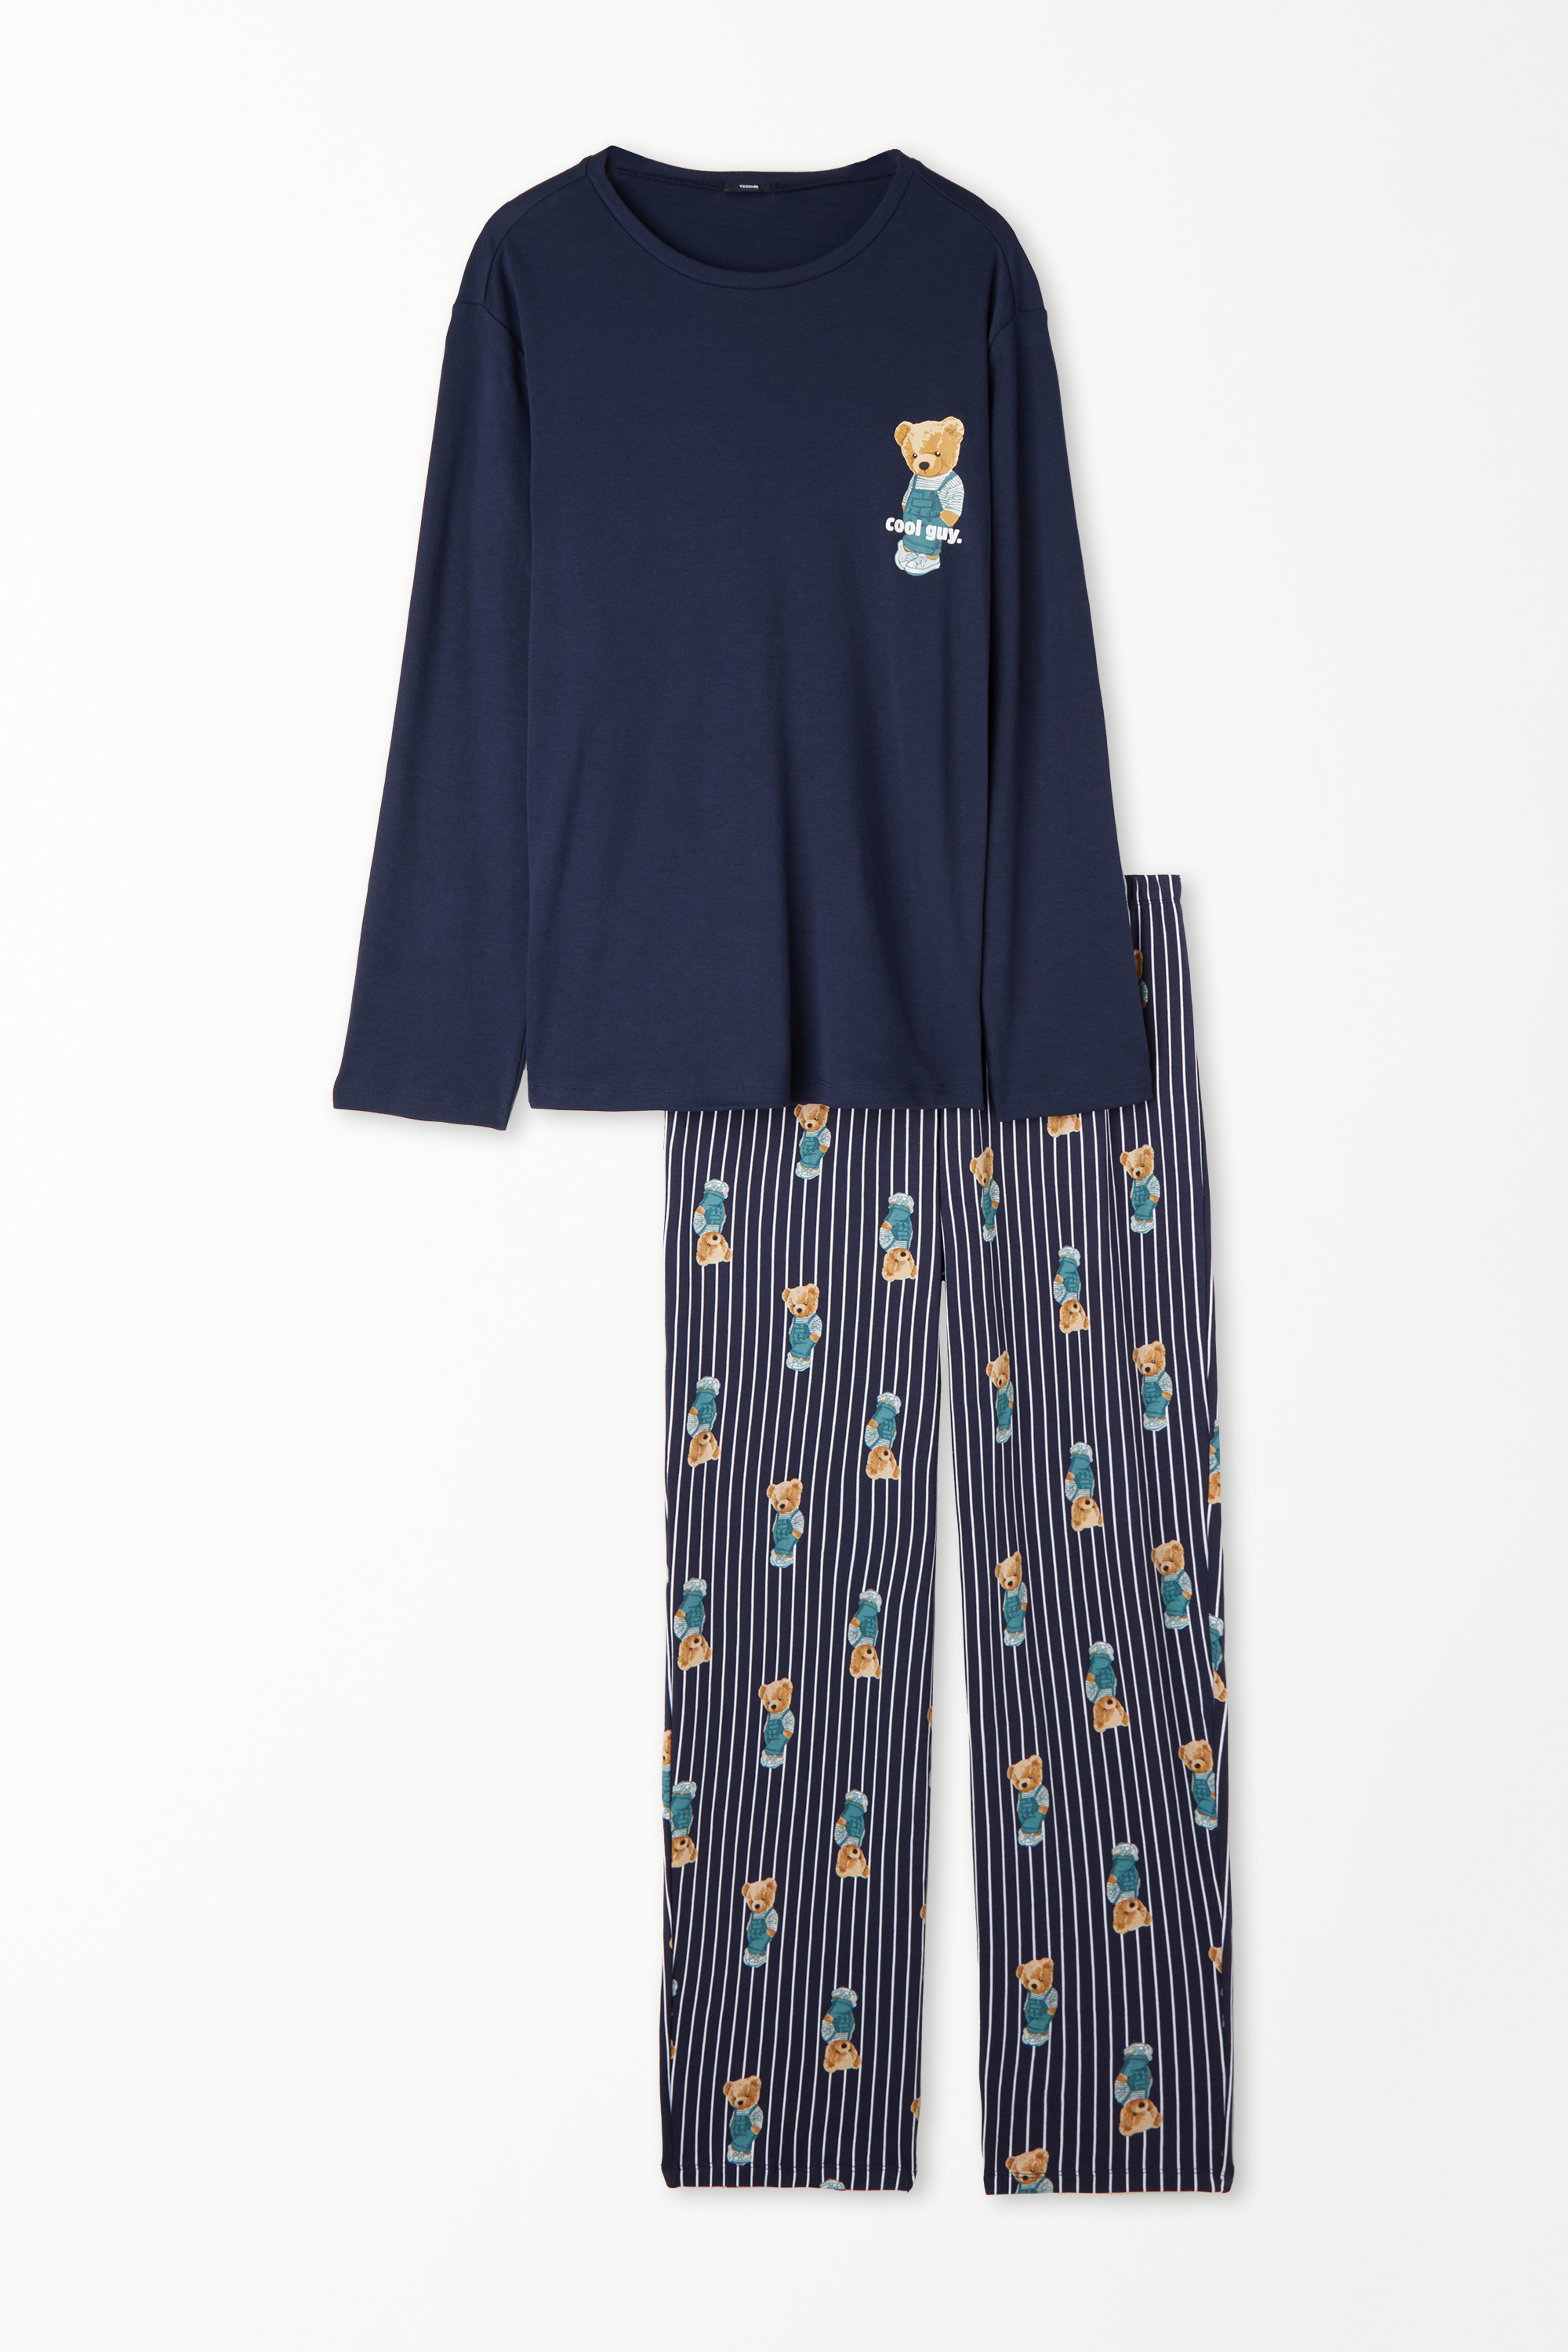 Langer Pyjama Baumwolle Bärchenprint